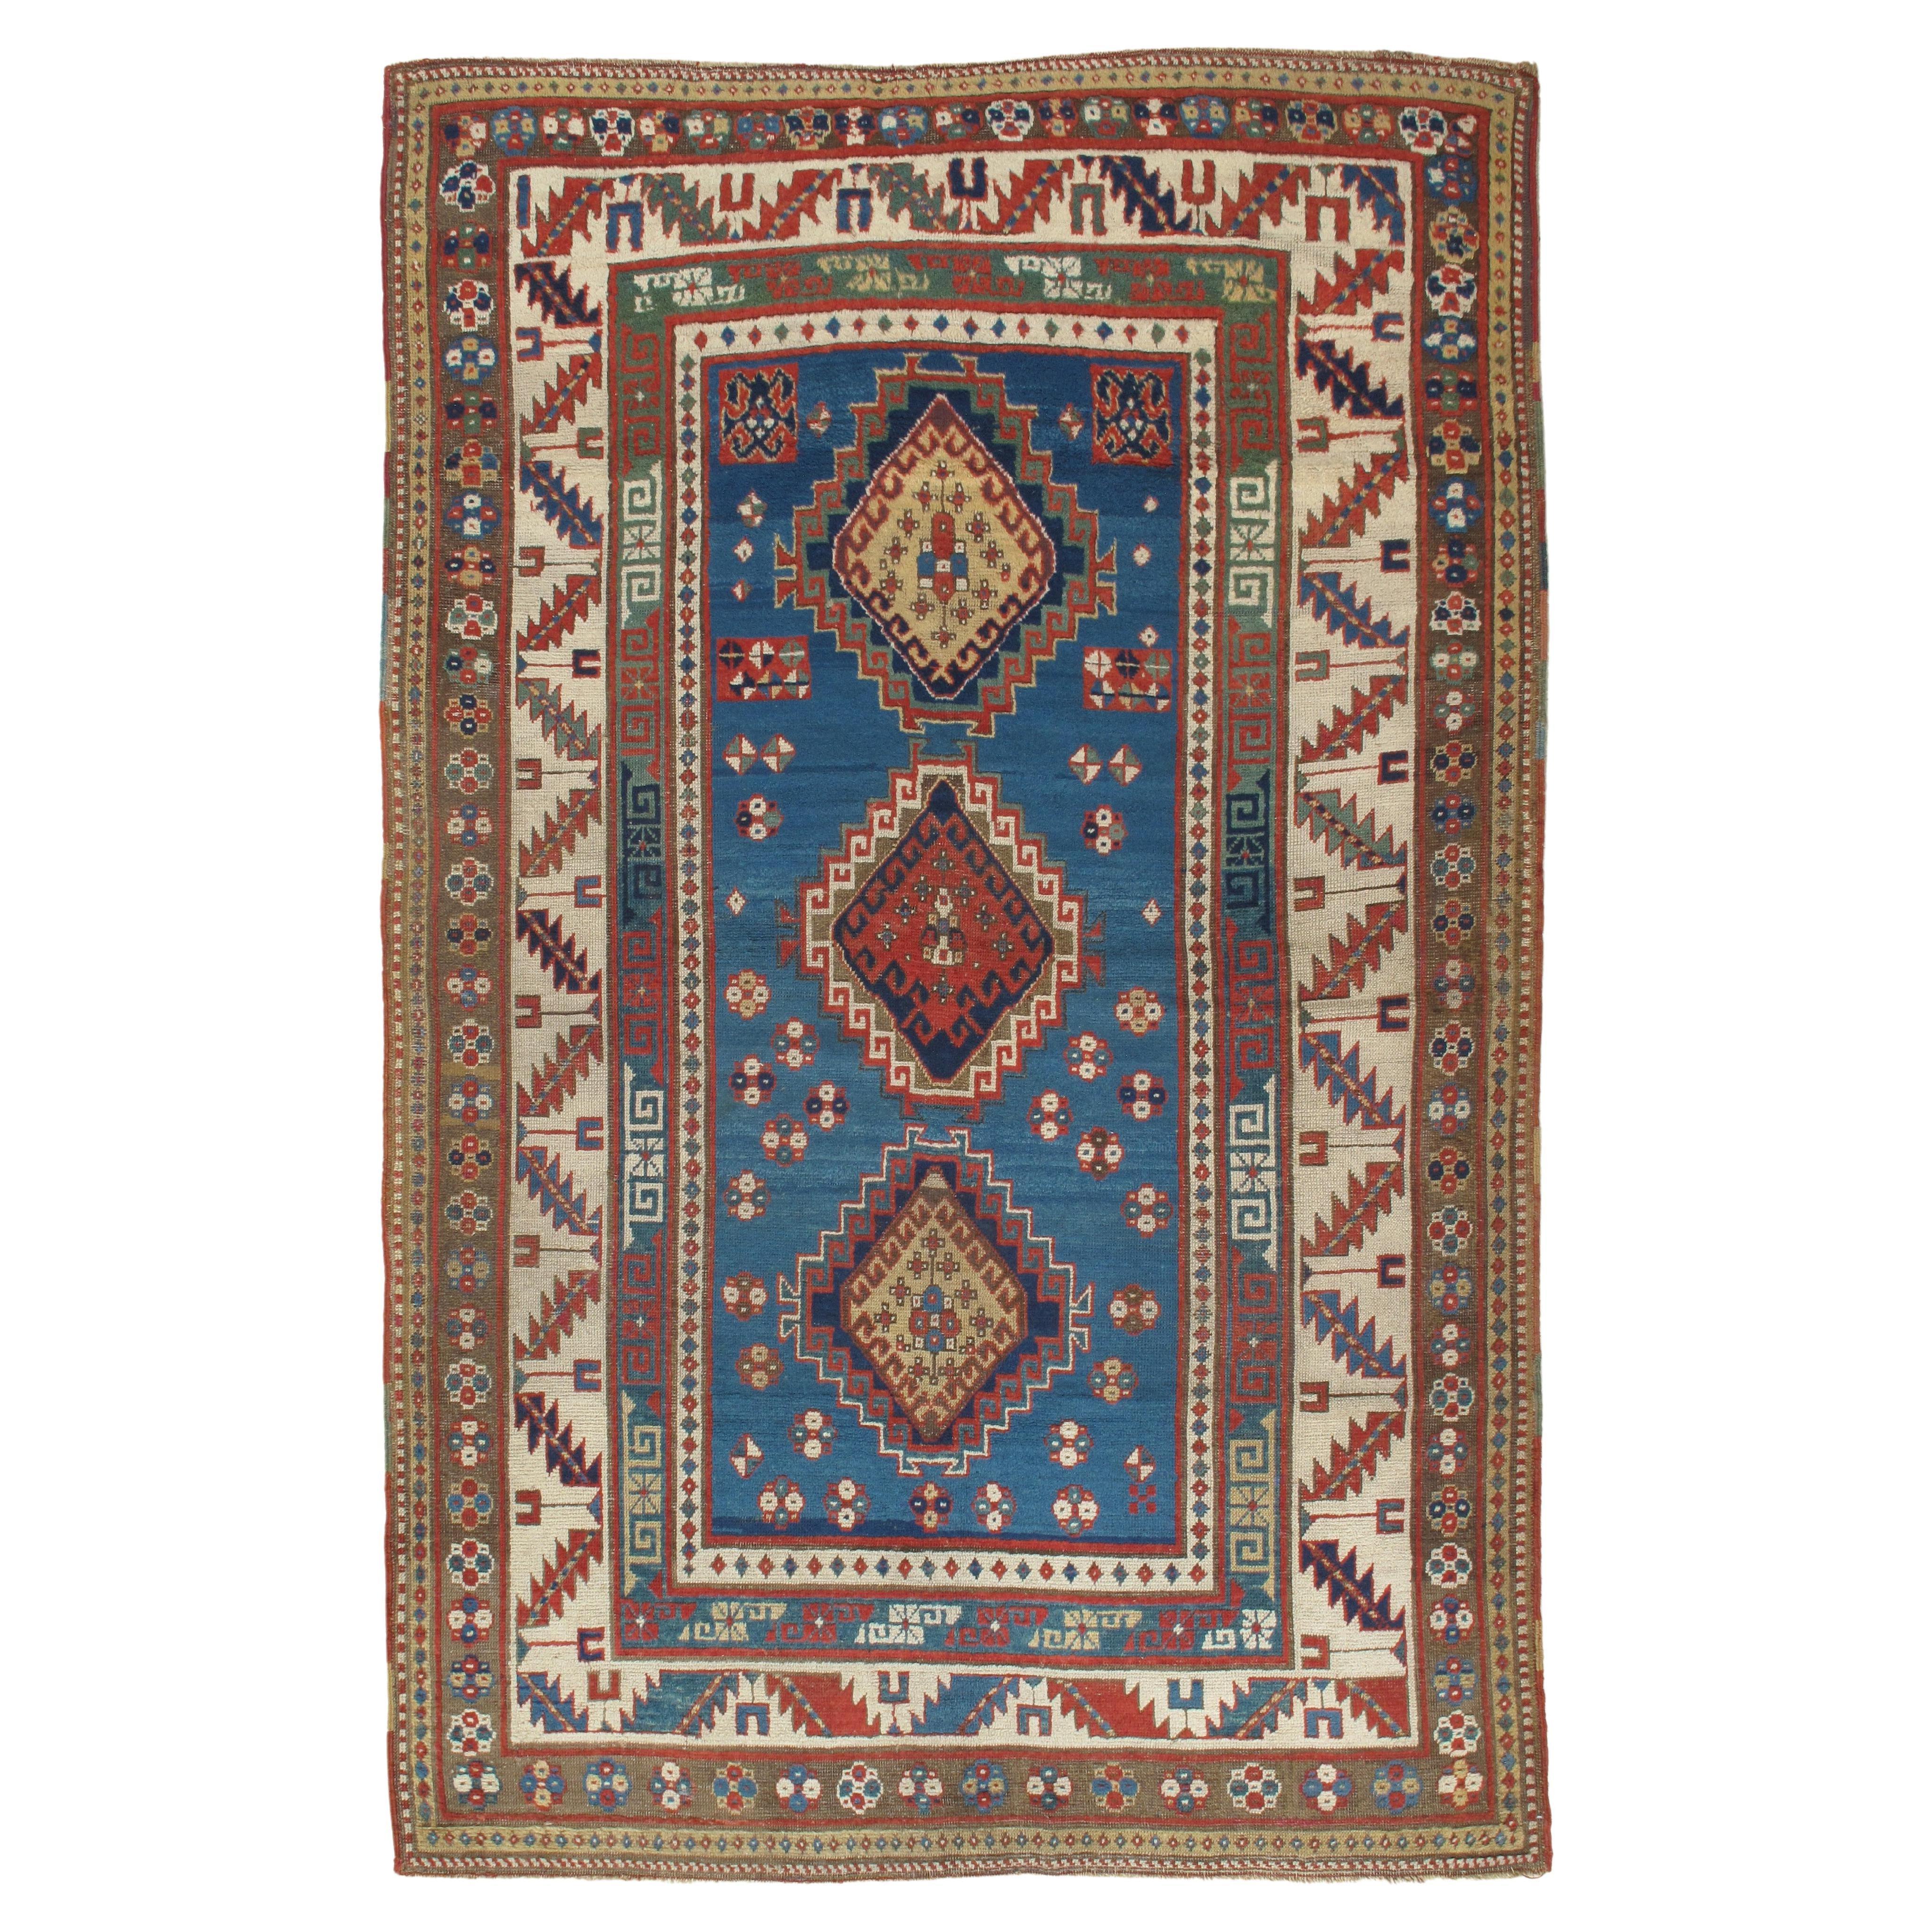 Antique Kazak Carpet, Handmade Wool, Rust, Ivory, Navy, Light Blue and Gold